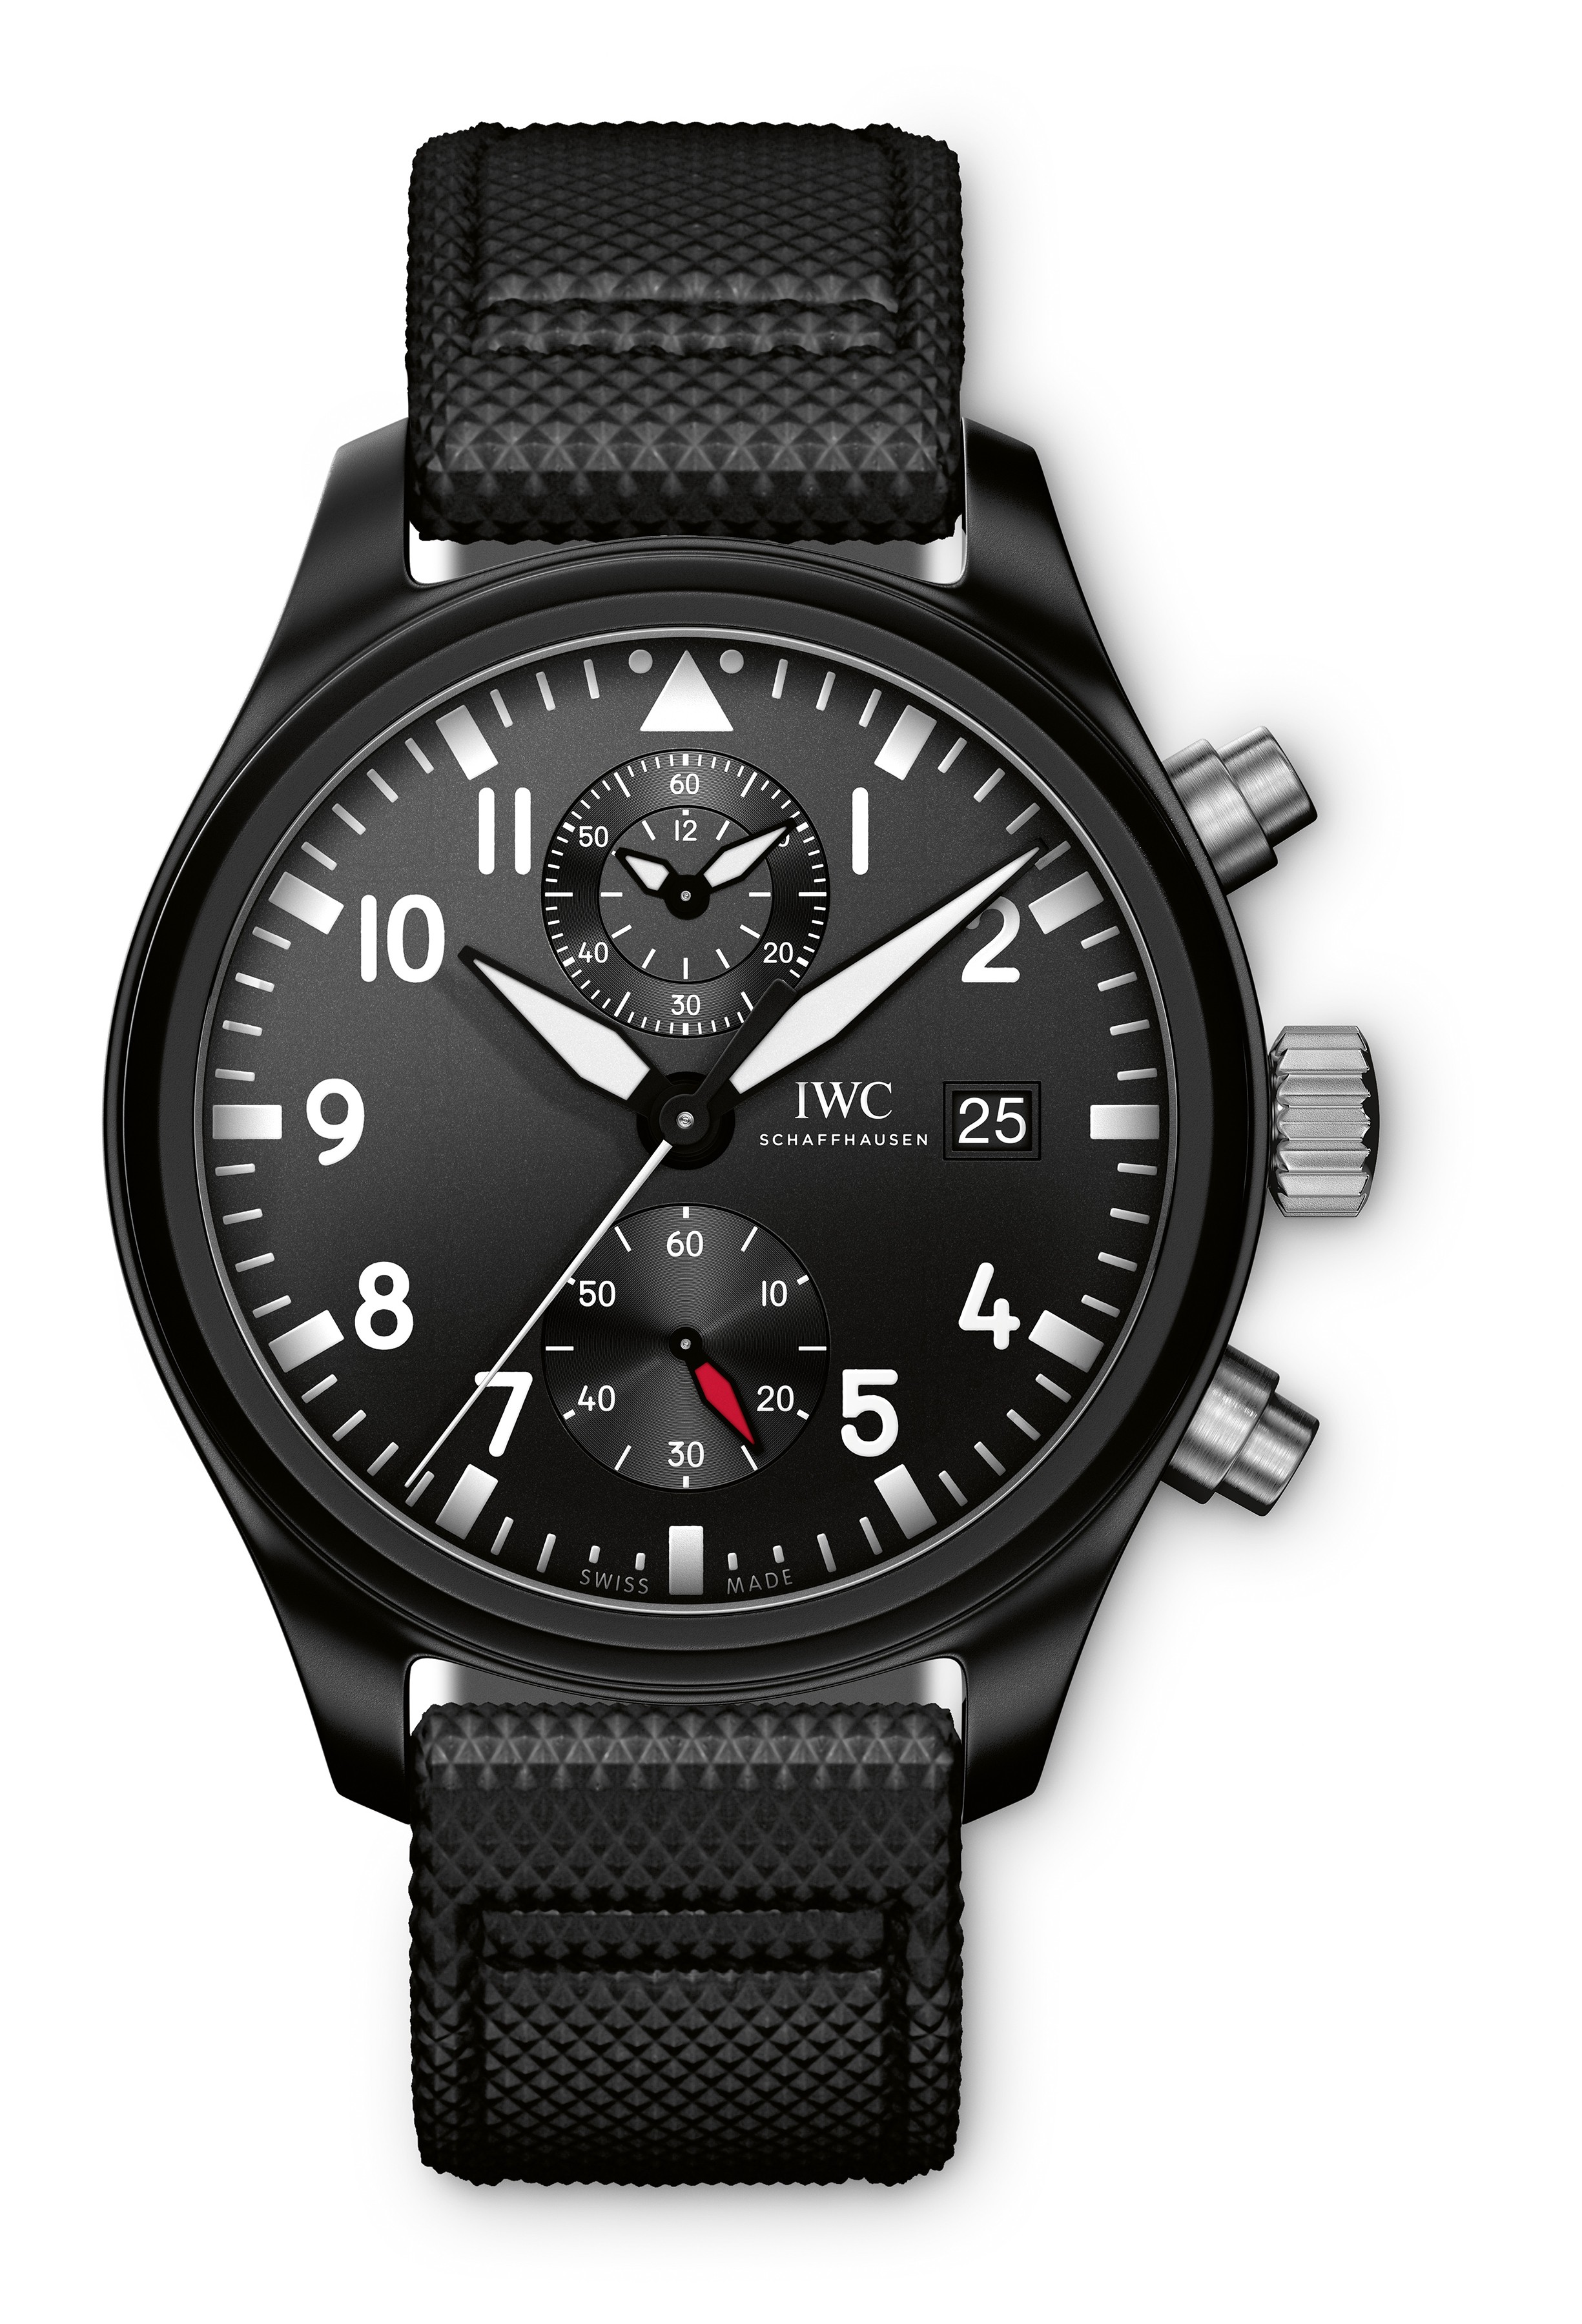 Cheap Fashionable IWC Top Gun Naval Air Force Pilots Chronograph Replica Watches For Men